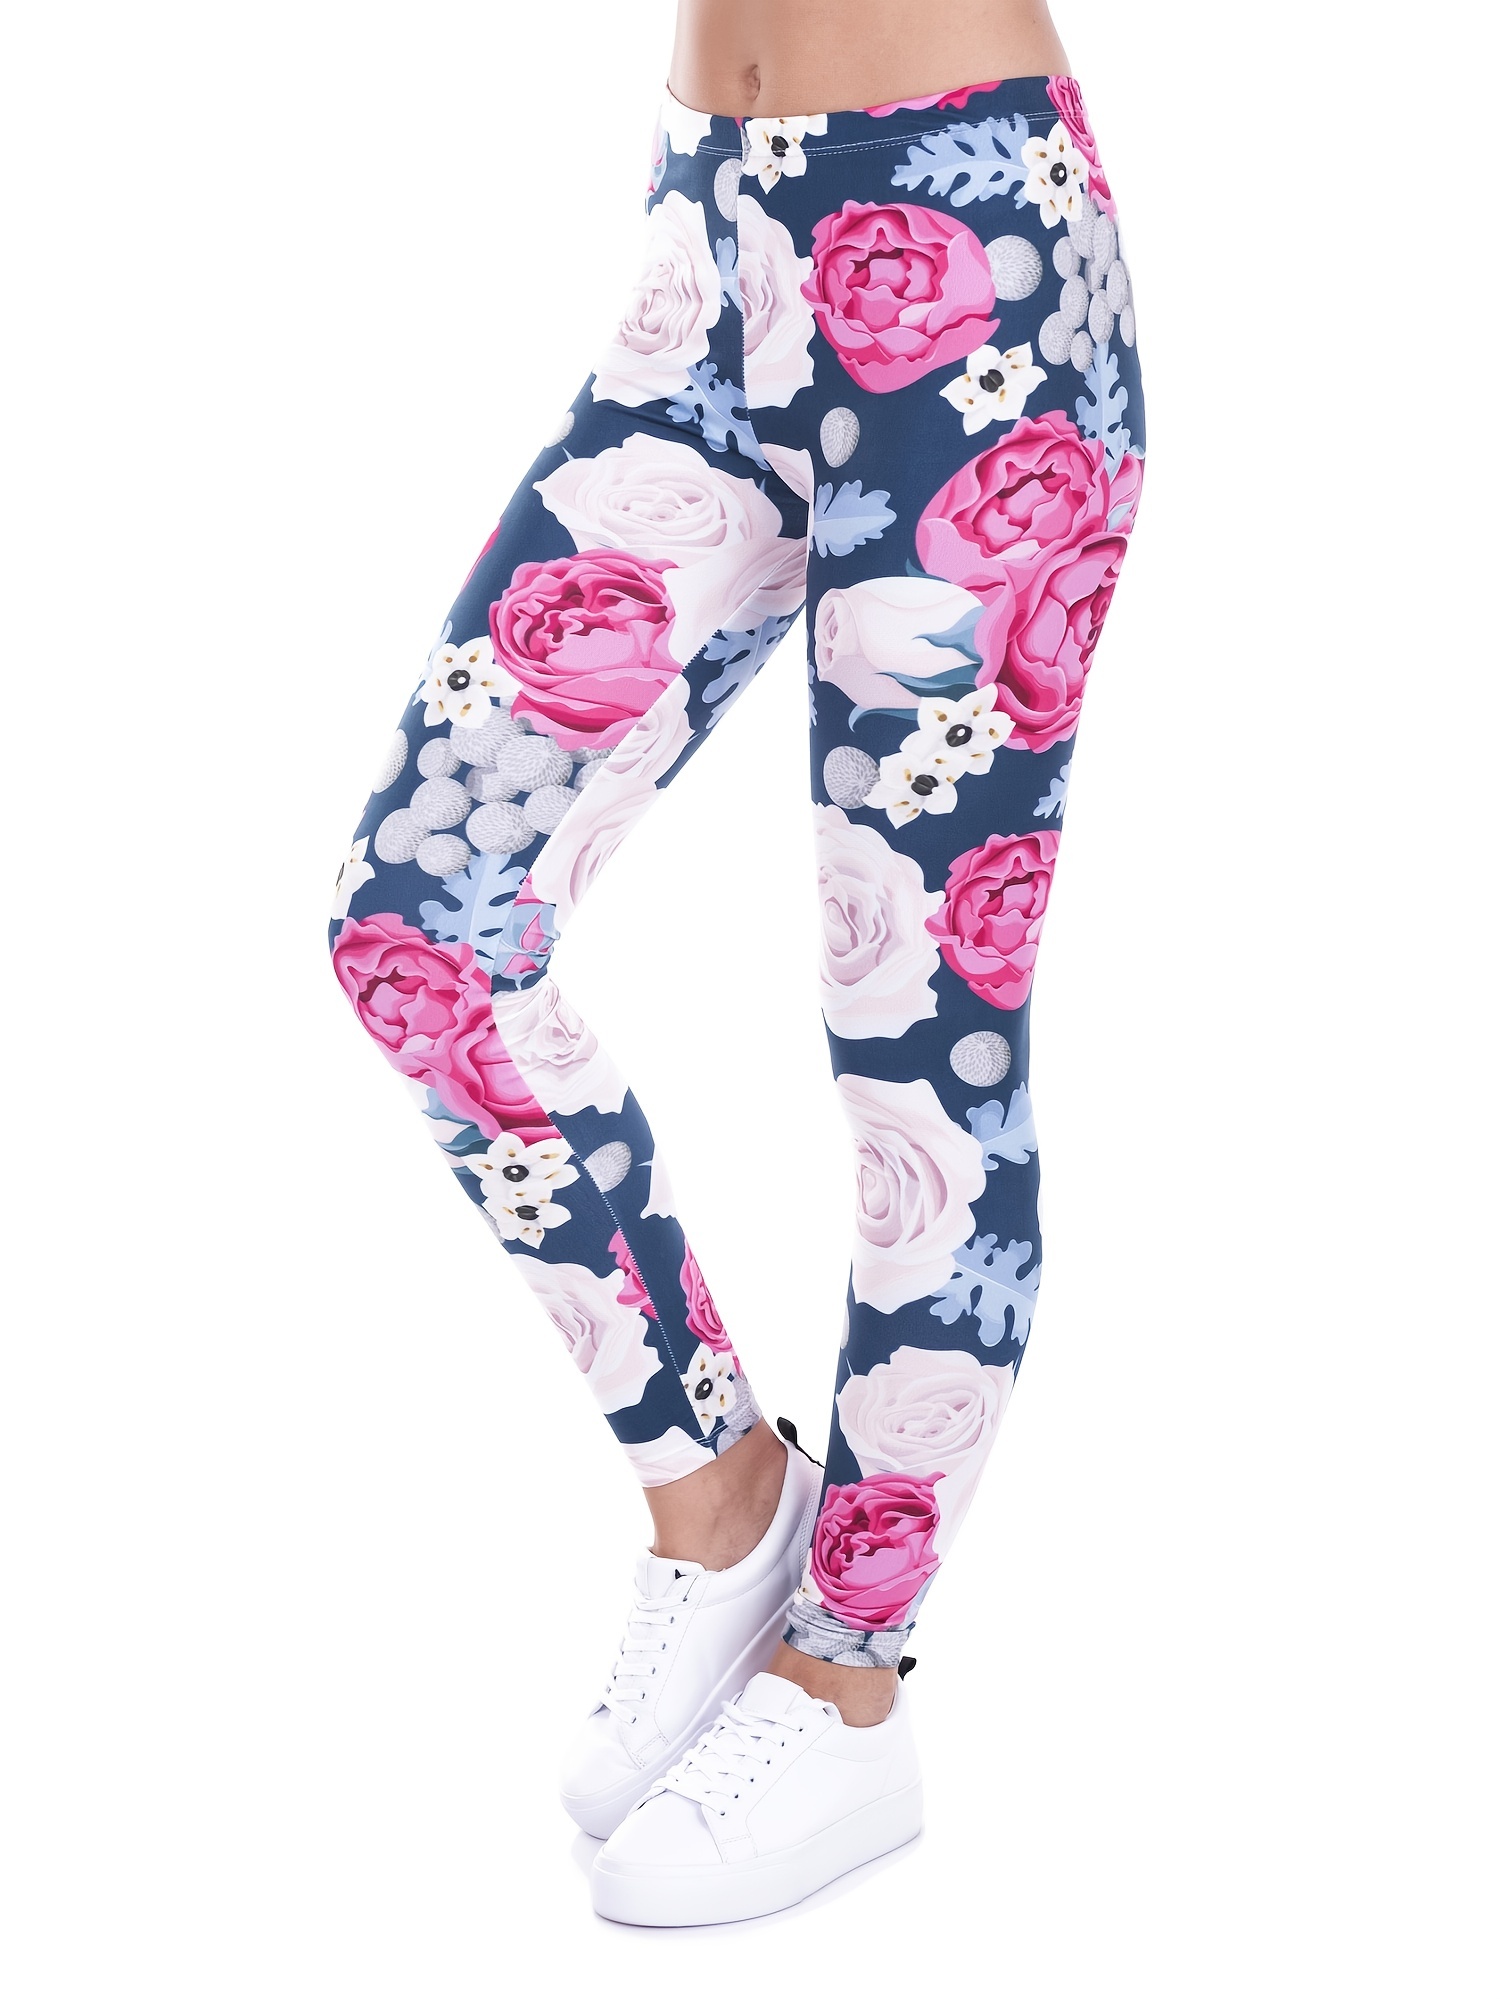 Rose Floral Print Skinny Leggings, Casual Elastic Waist Stretchy Leggings,  Women's Clothing